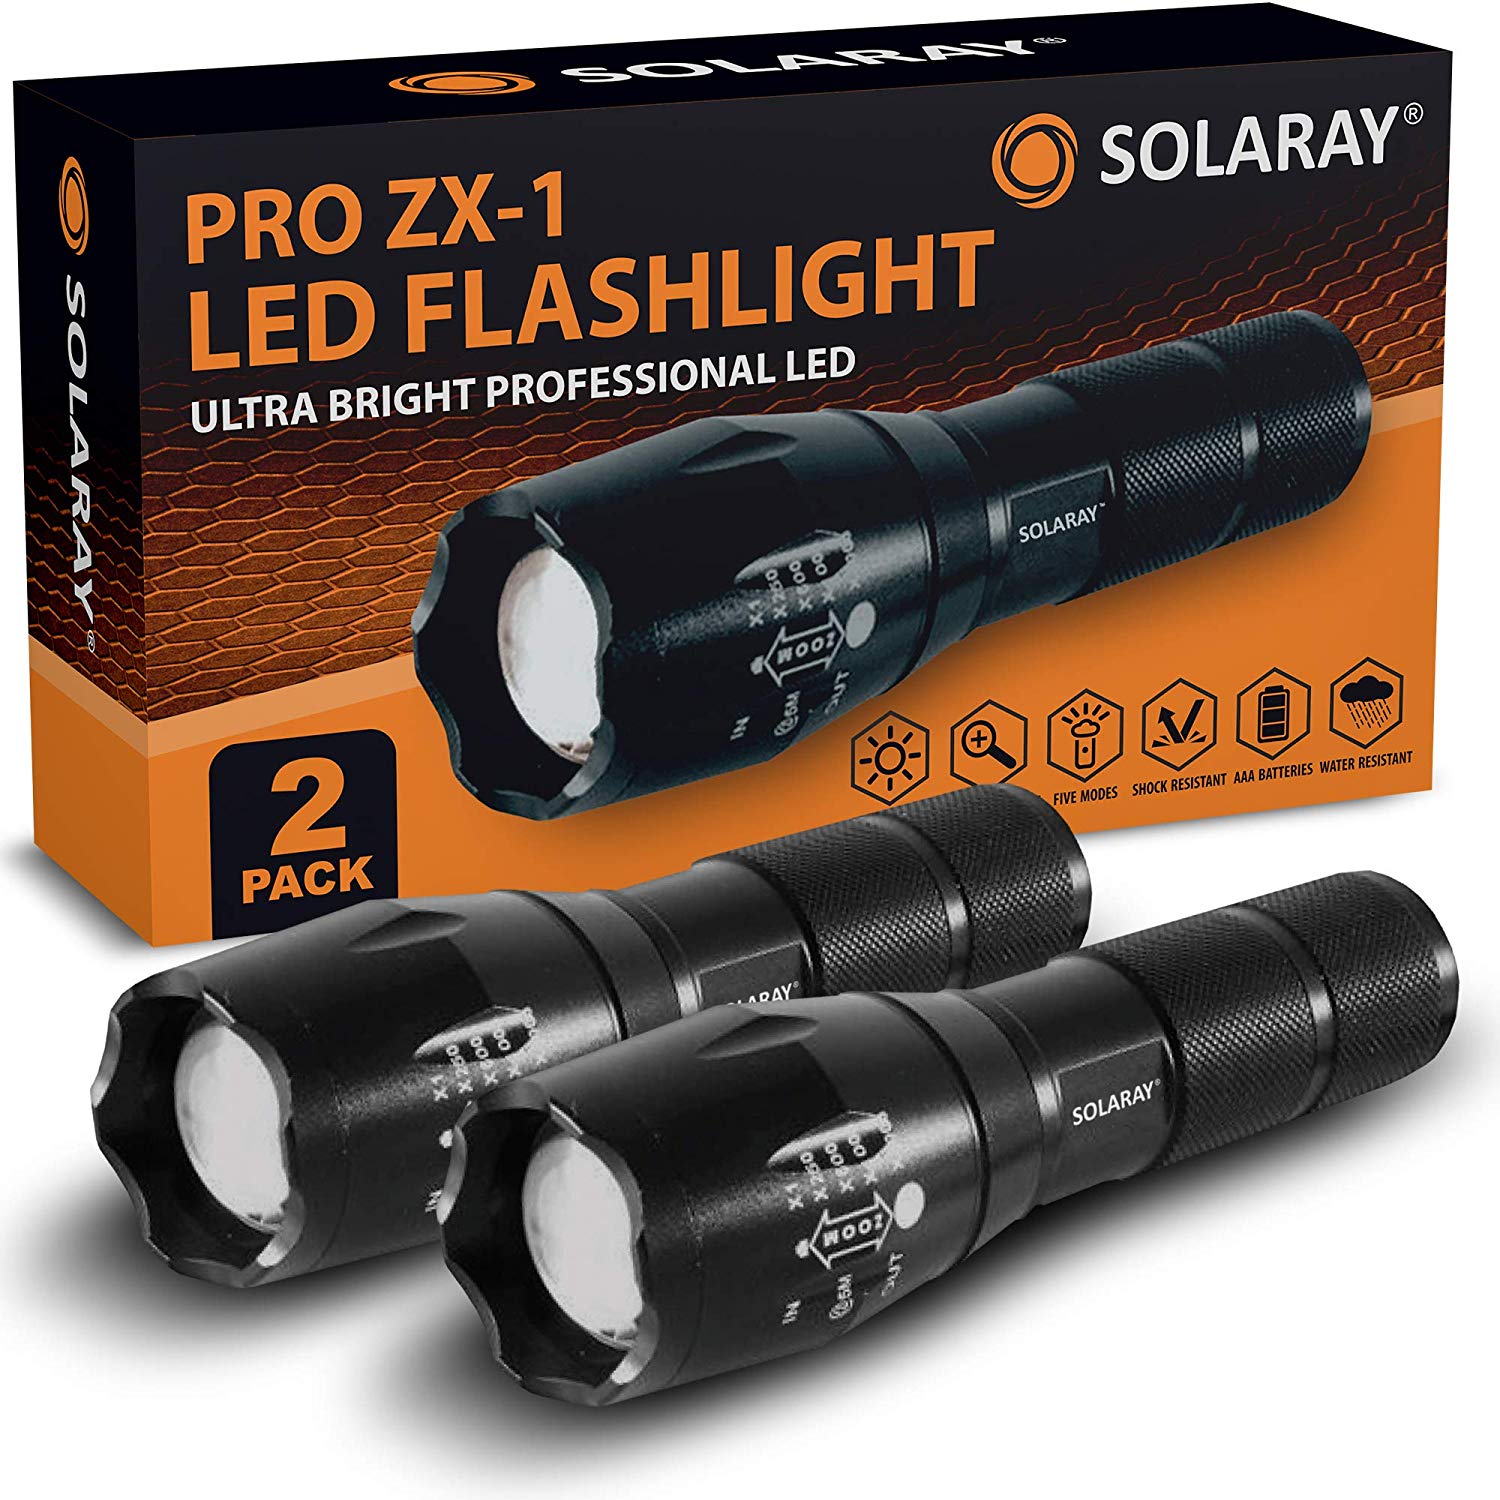 ZX-1 LED Flashlight with Strobe Light [2 Pack] - Solaray